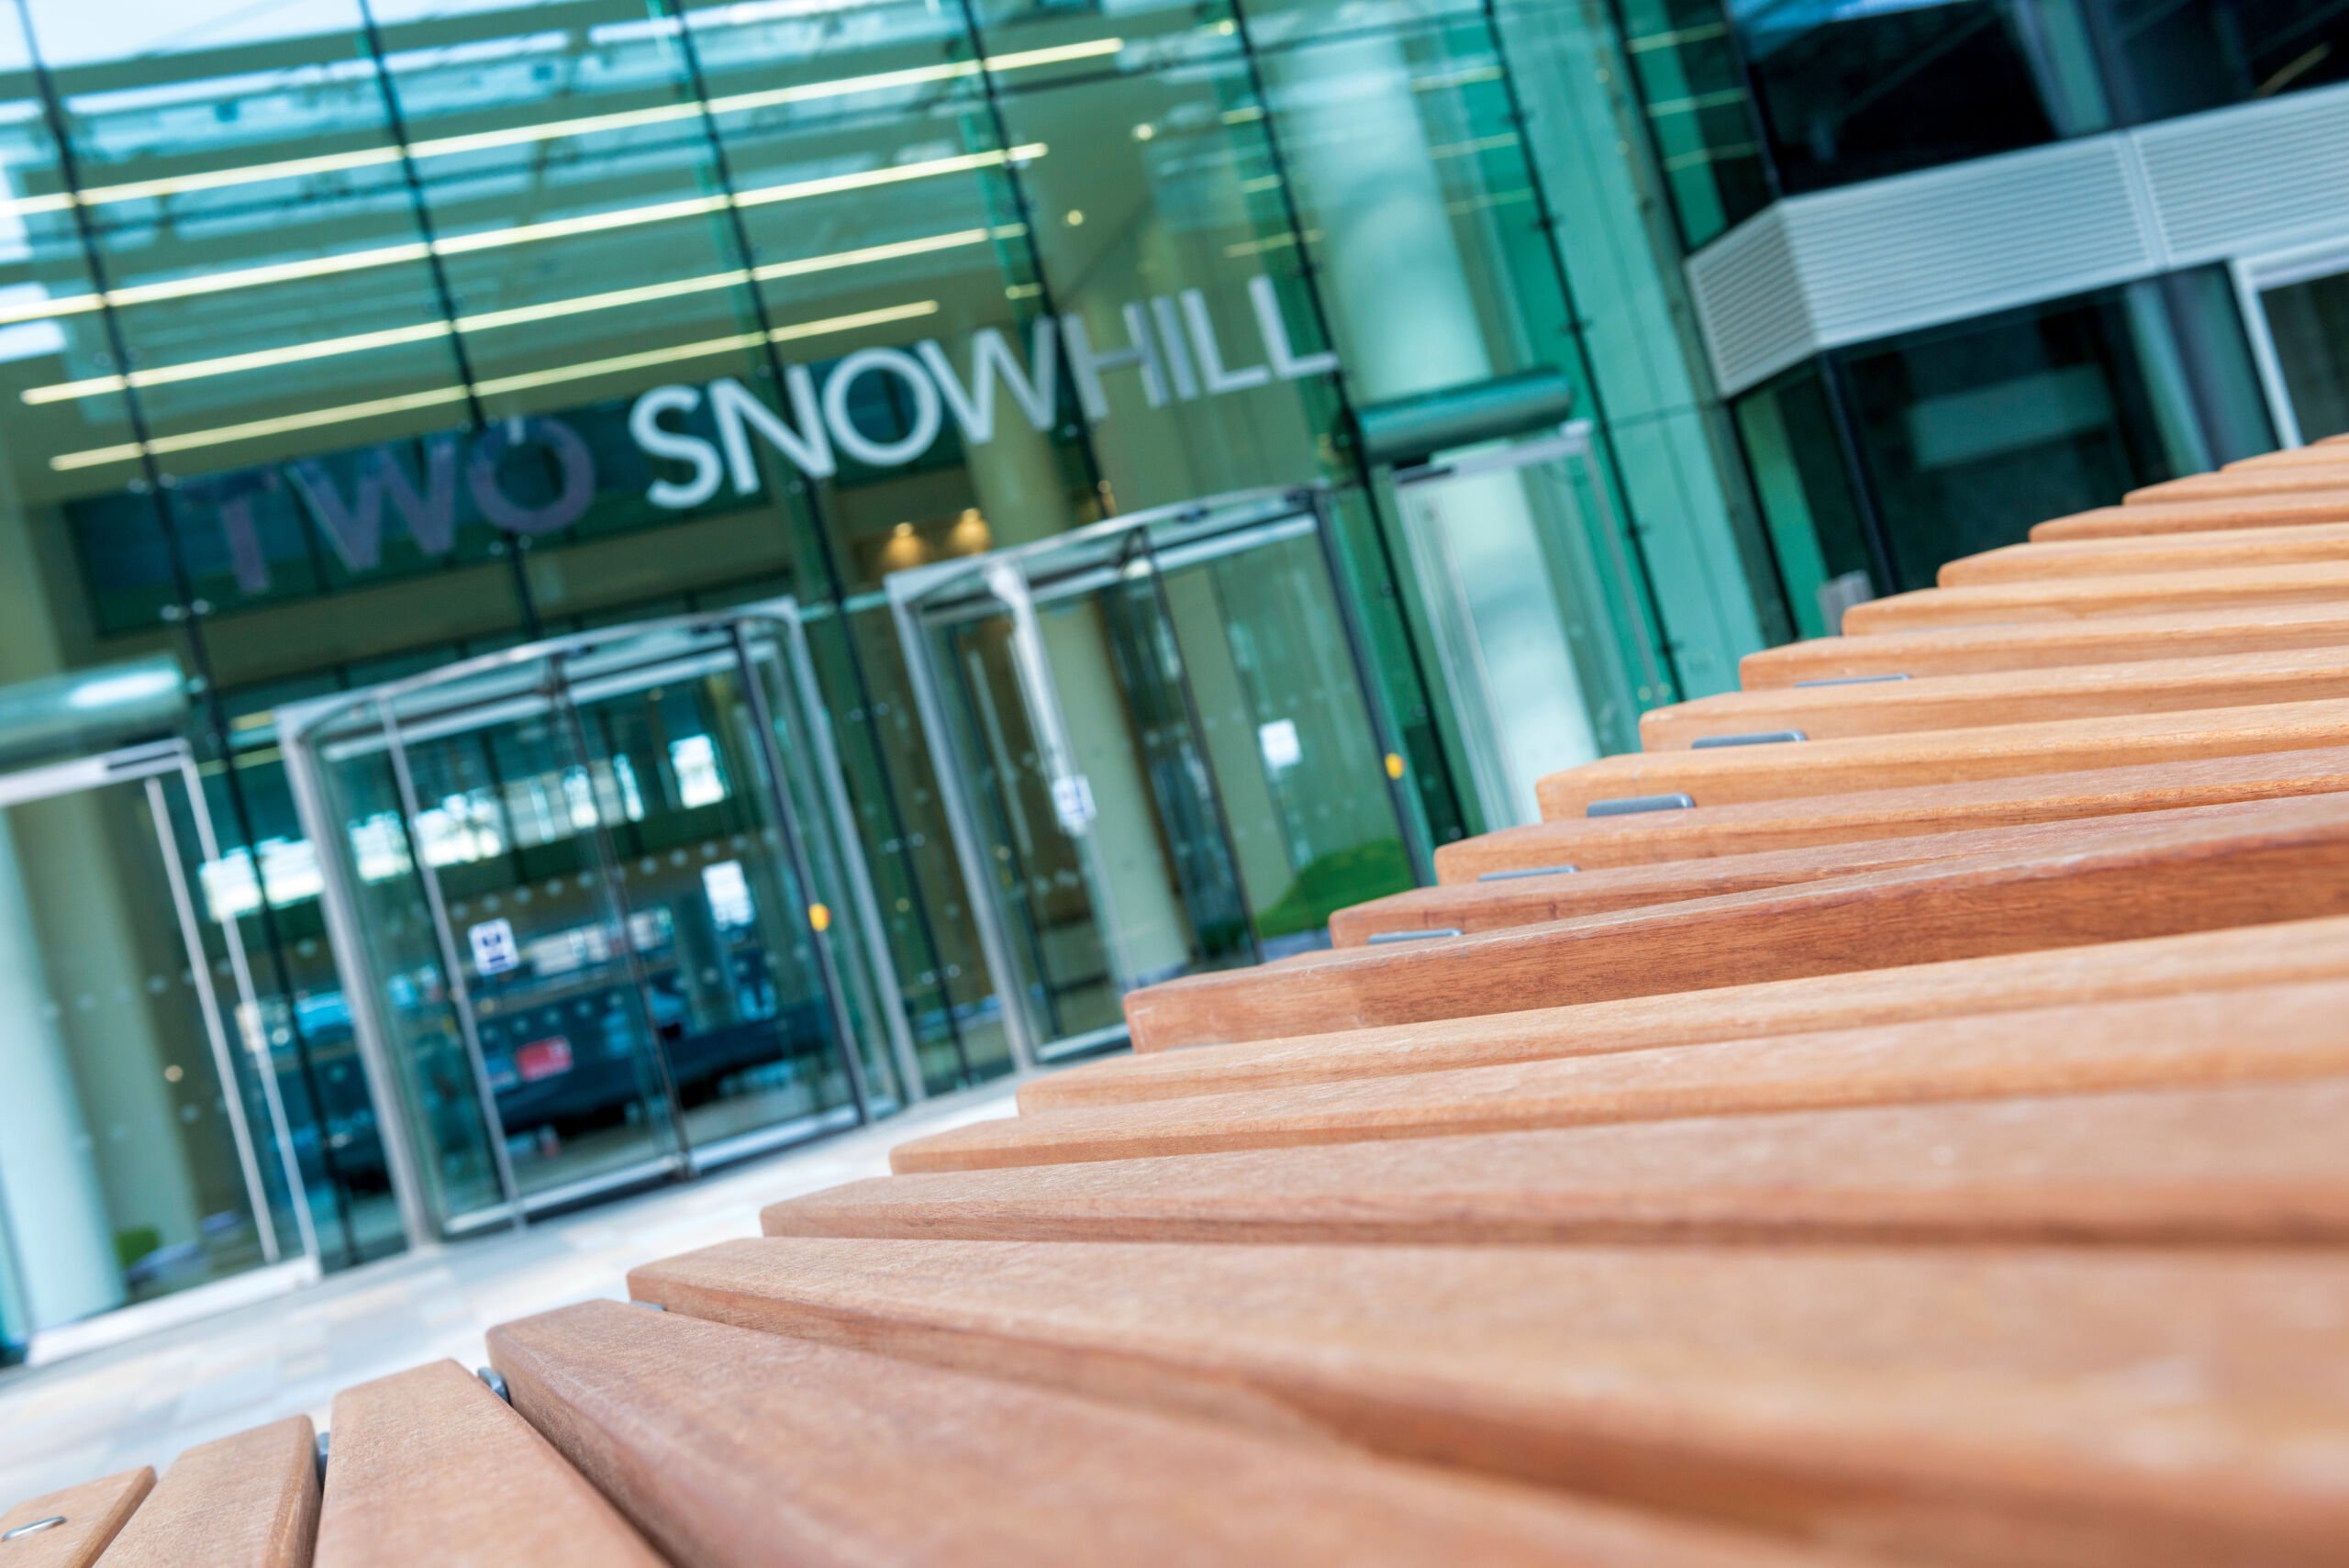 Two Snowhill, Birmingham City Centre.